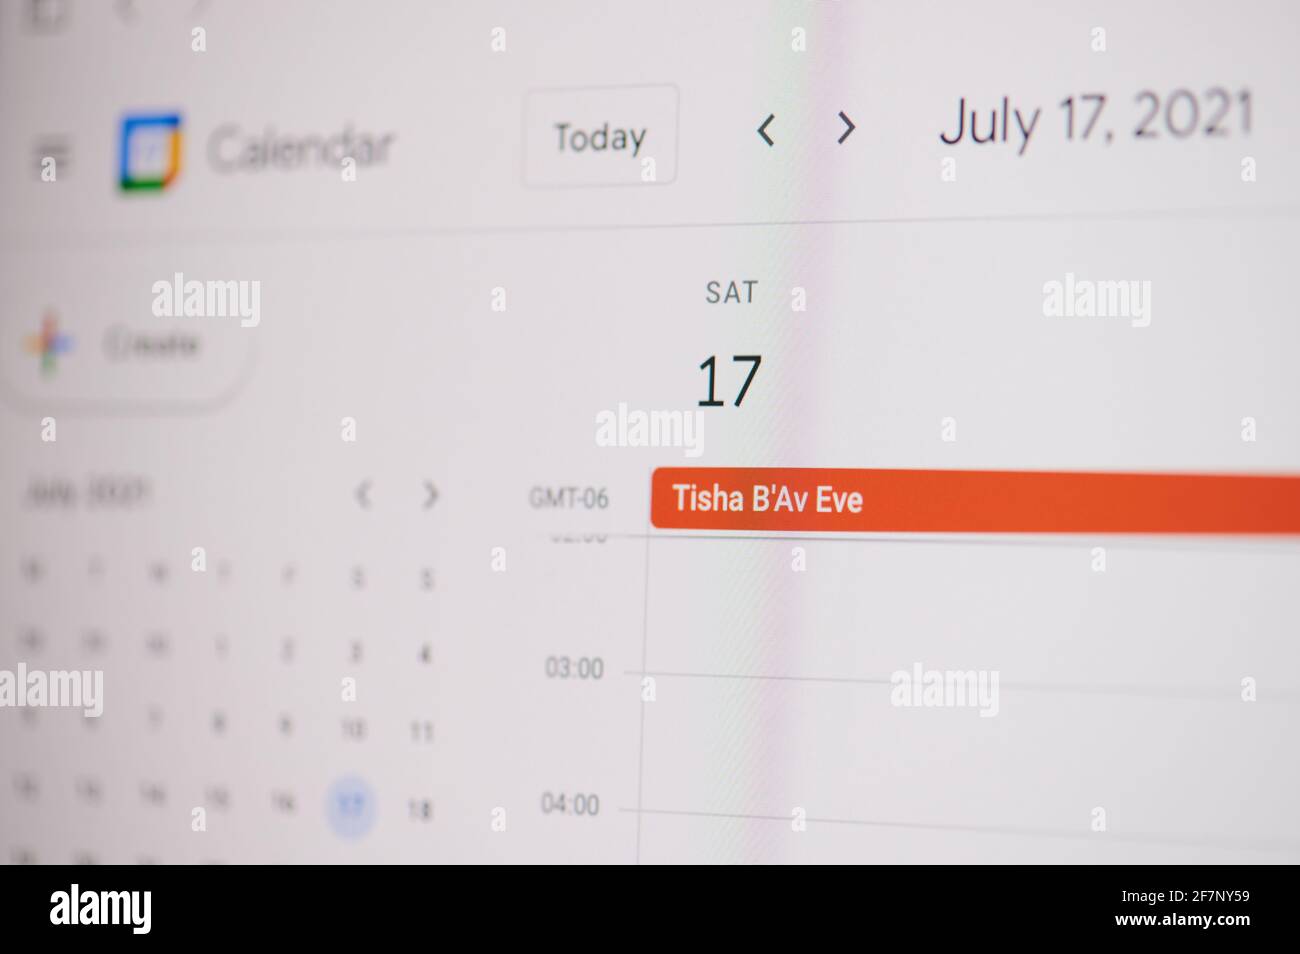 New york, USA - February 17, 2021:Tisha Bav Eve 17 of July on google calendar on laptop screen close up view. Stock Photo